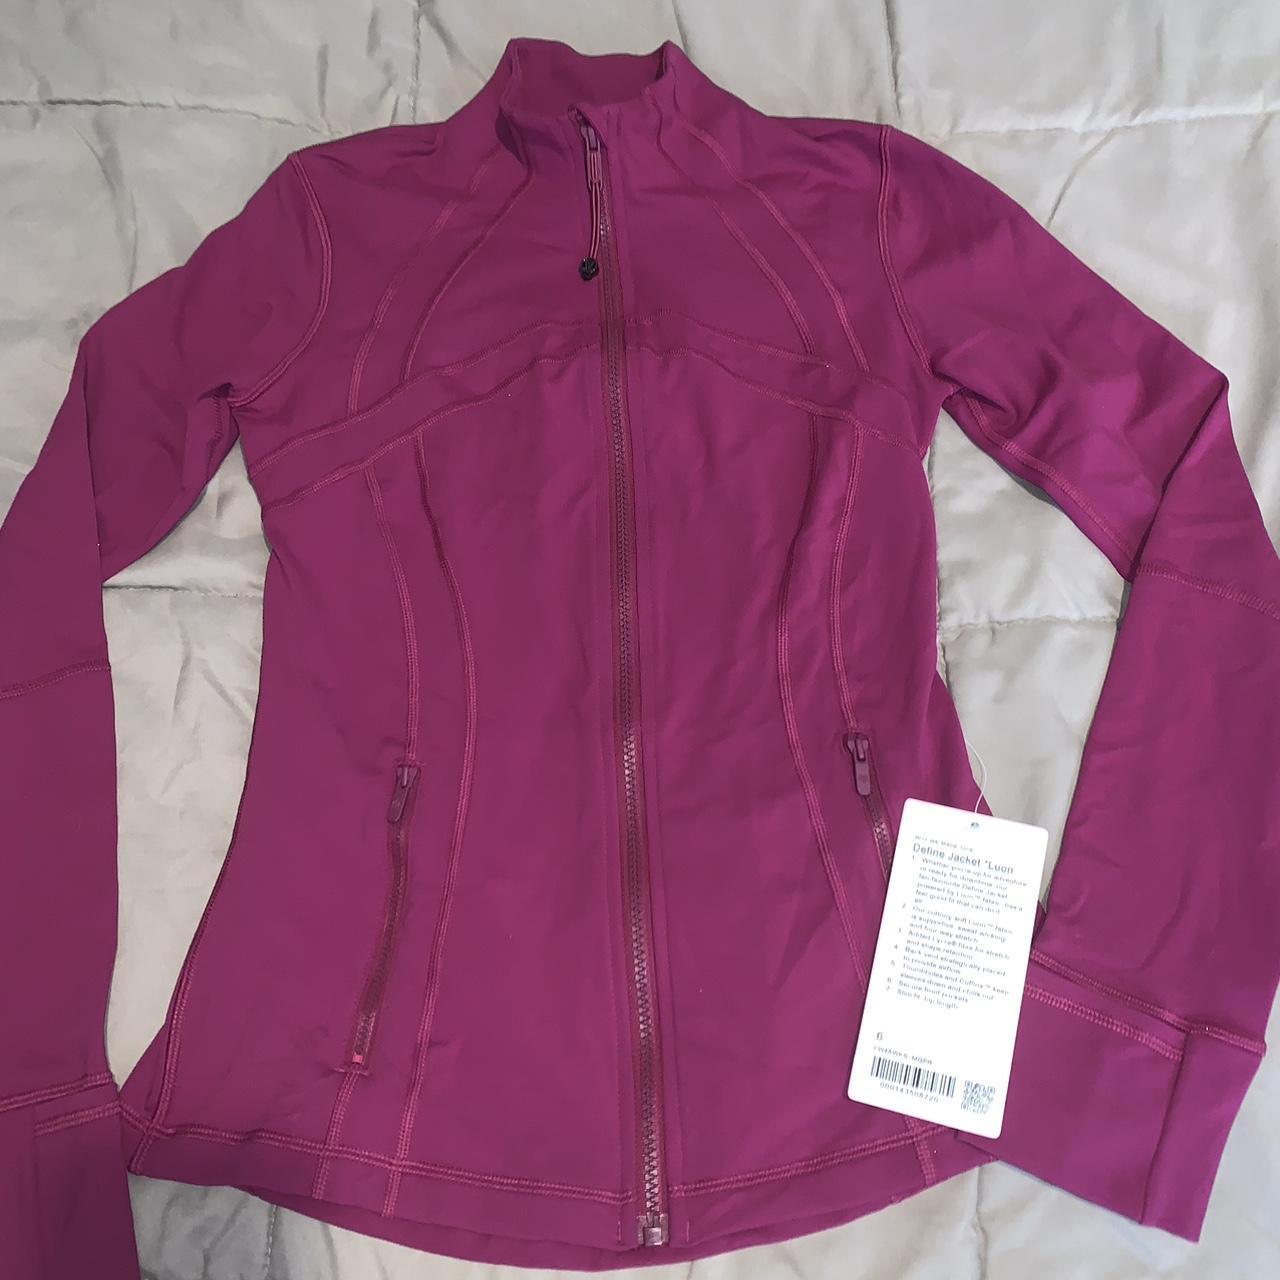 Define Jacket luon In: Magenta Purple - Depop